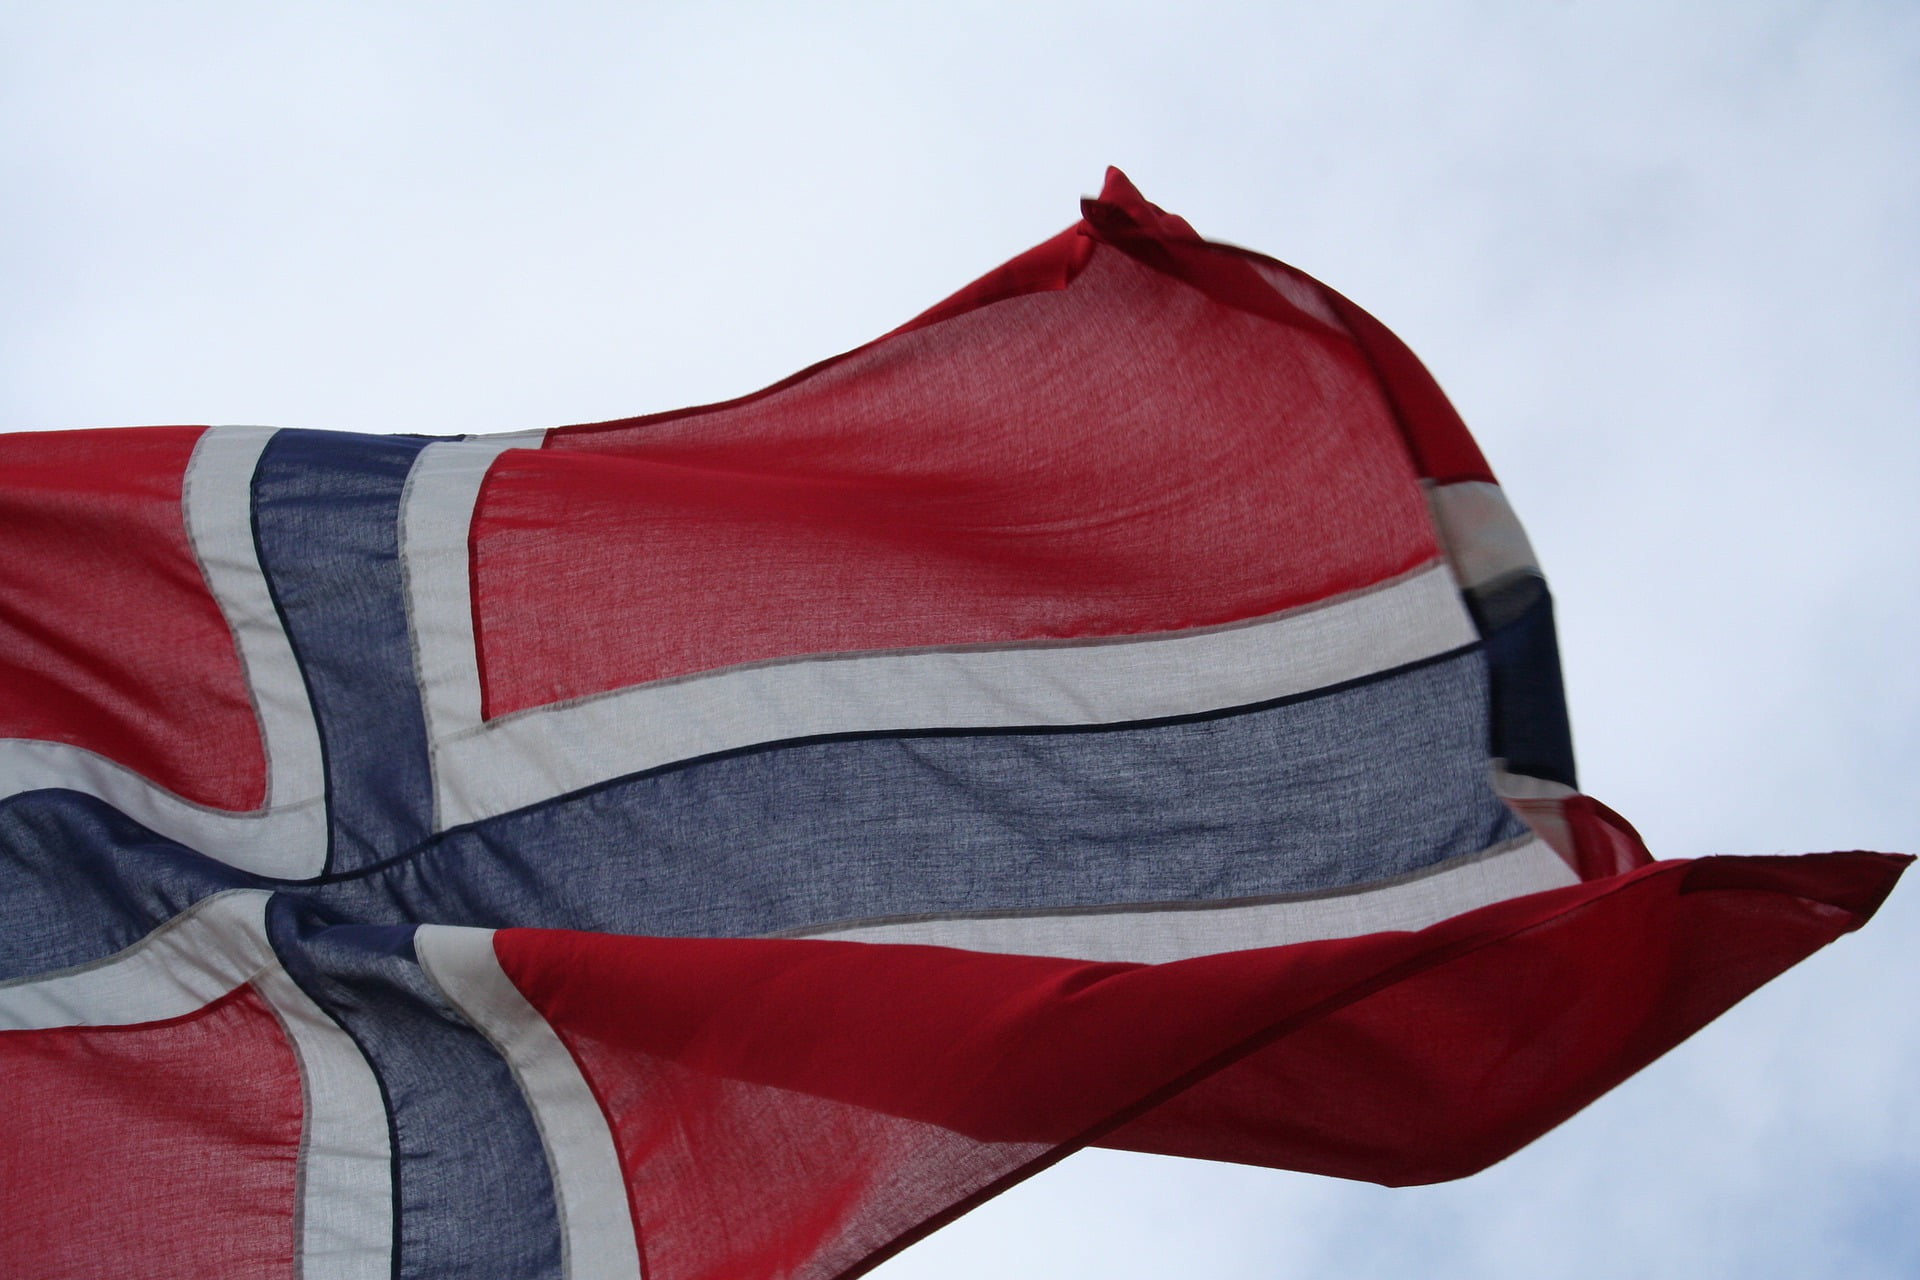 Noorse vlag